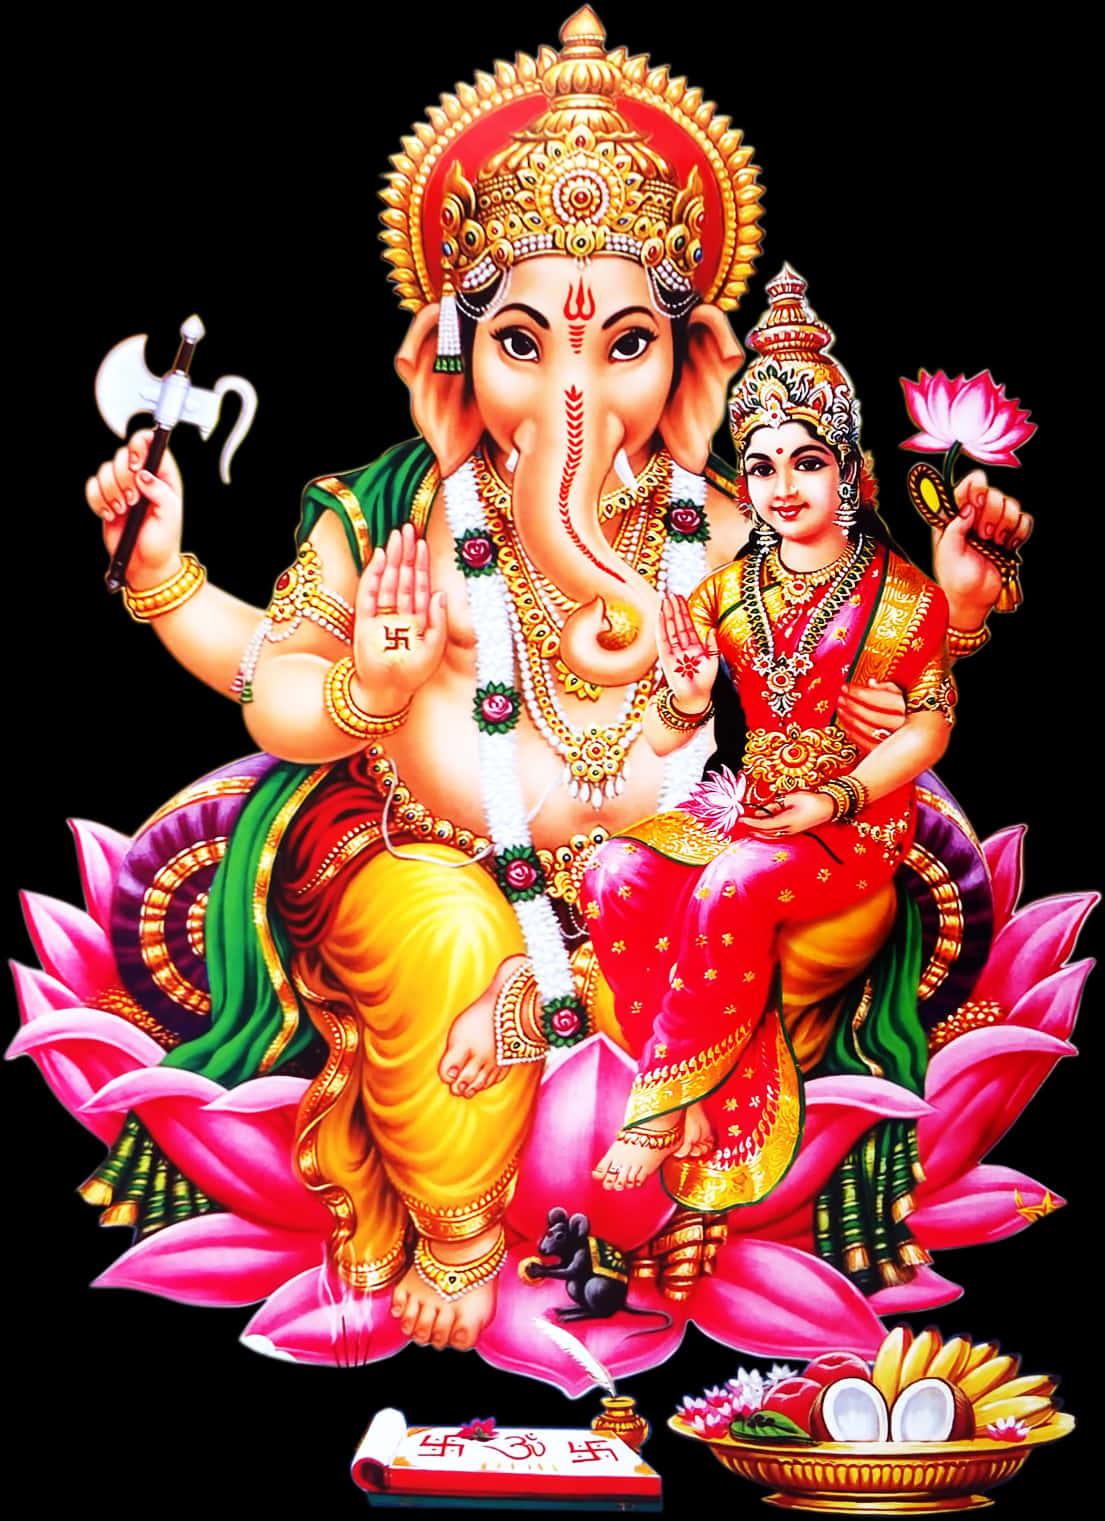 Lord Ganeshand Goddess Lakshmion Lotus